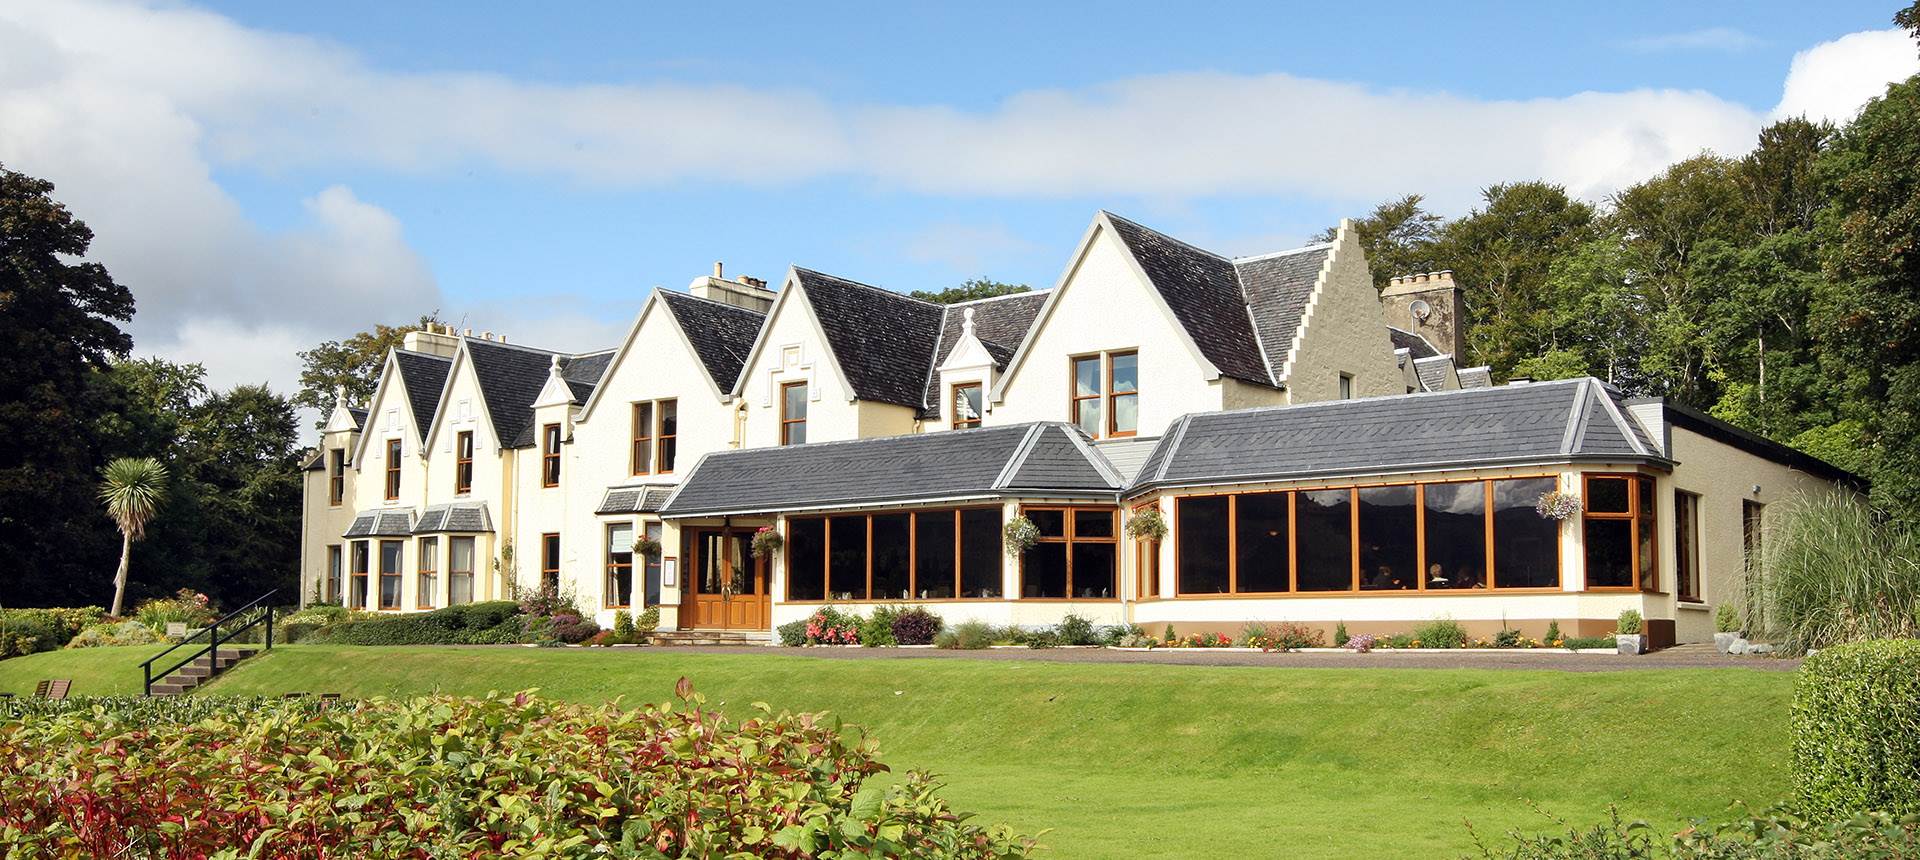 The Cuillin Hills Hotel in Isle of Skye